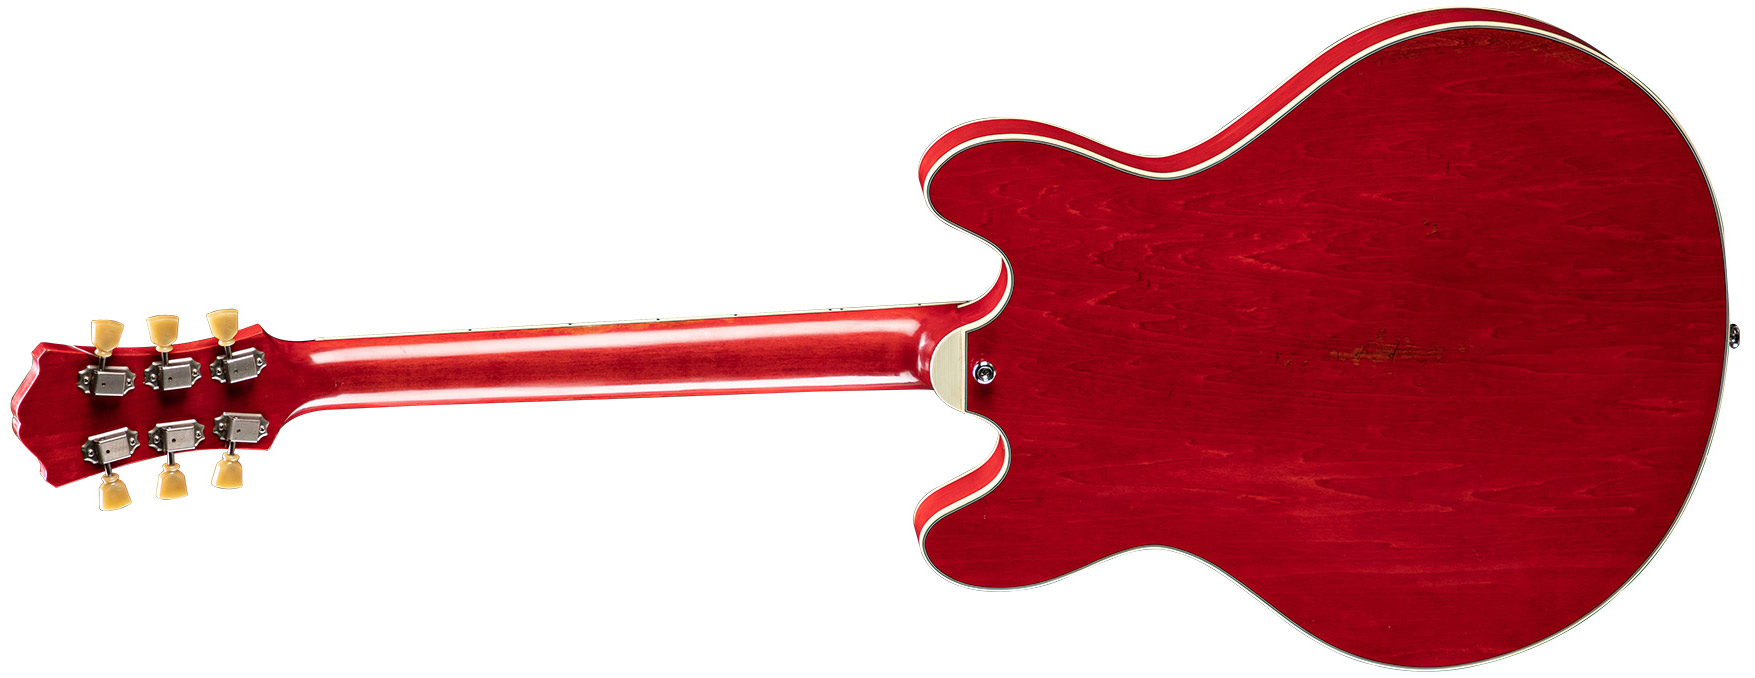 Eastman T64/v Thinline Laminate Tout Erable 2p90 Lollar Ht Eb - Antique Red - Semi hollow elektriche gitaar - Variation 1